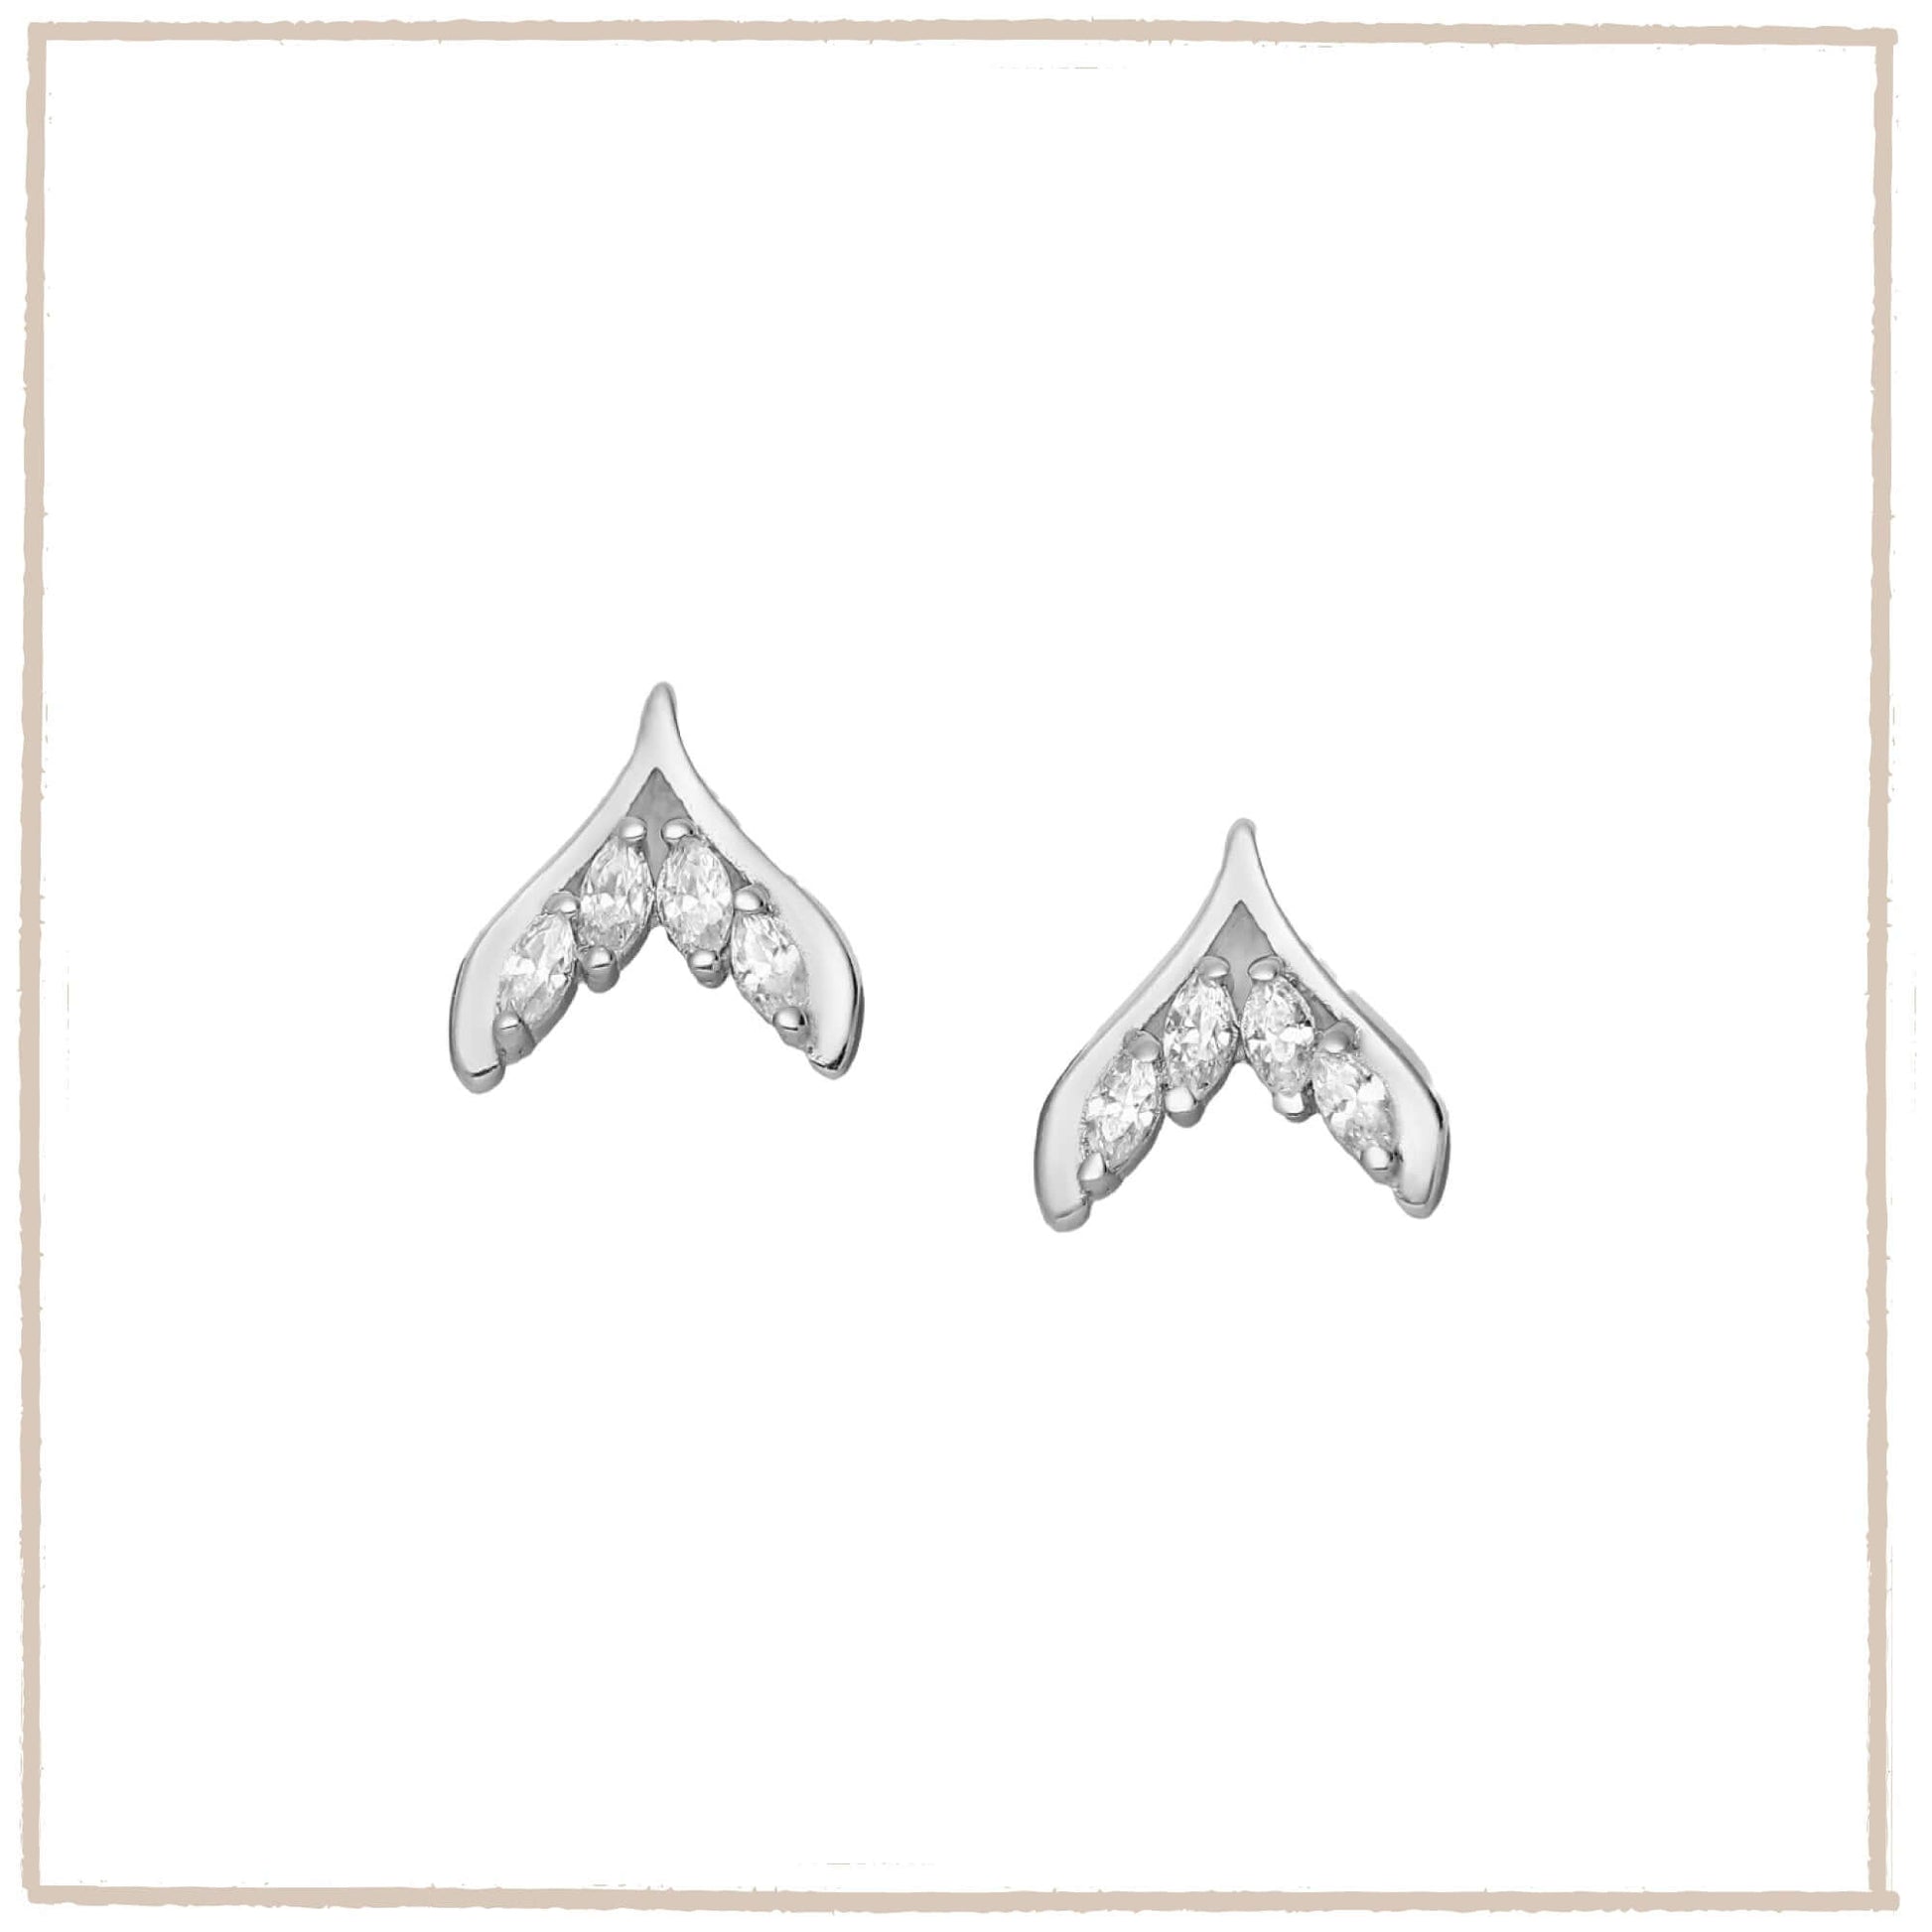 Whale Tail Sterling Silver CZ Stud Earrings - Twelve Silver Trees